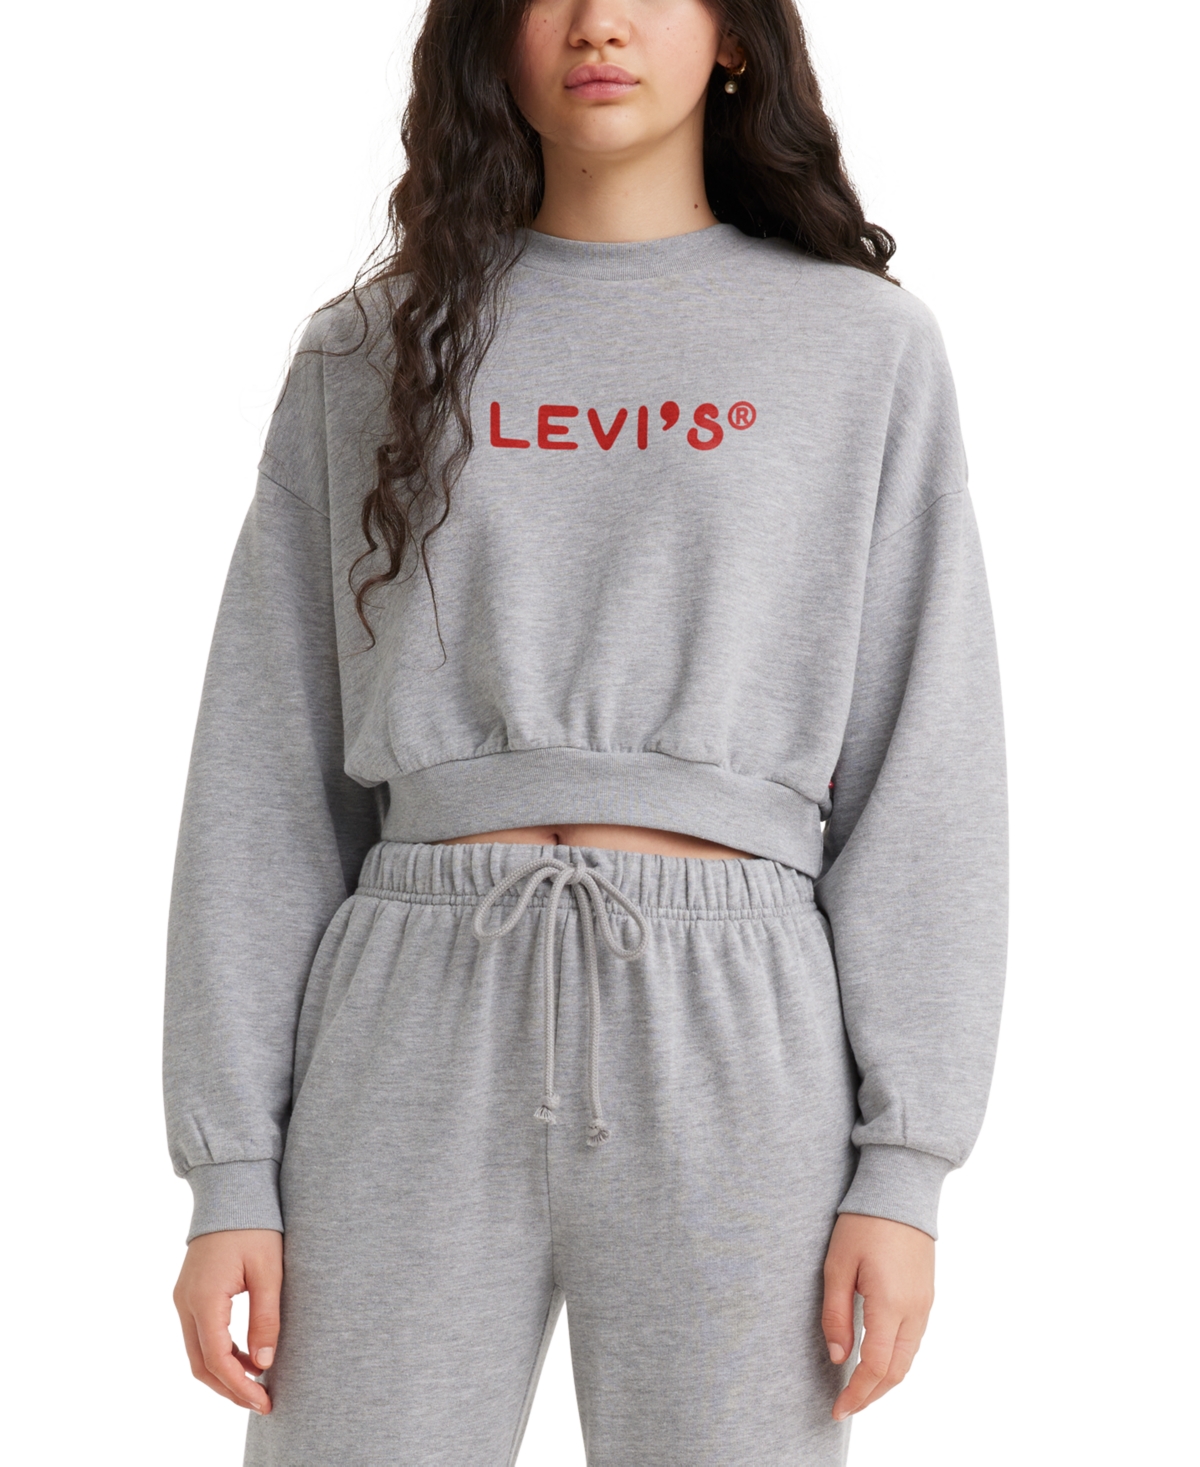  Levi's Women's Graphic Laundry Day Crewneck Sweatshirt, Created for Macy's